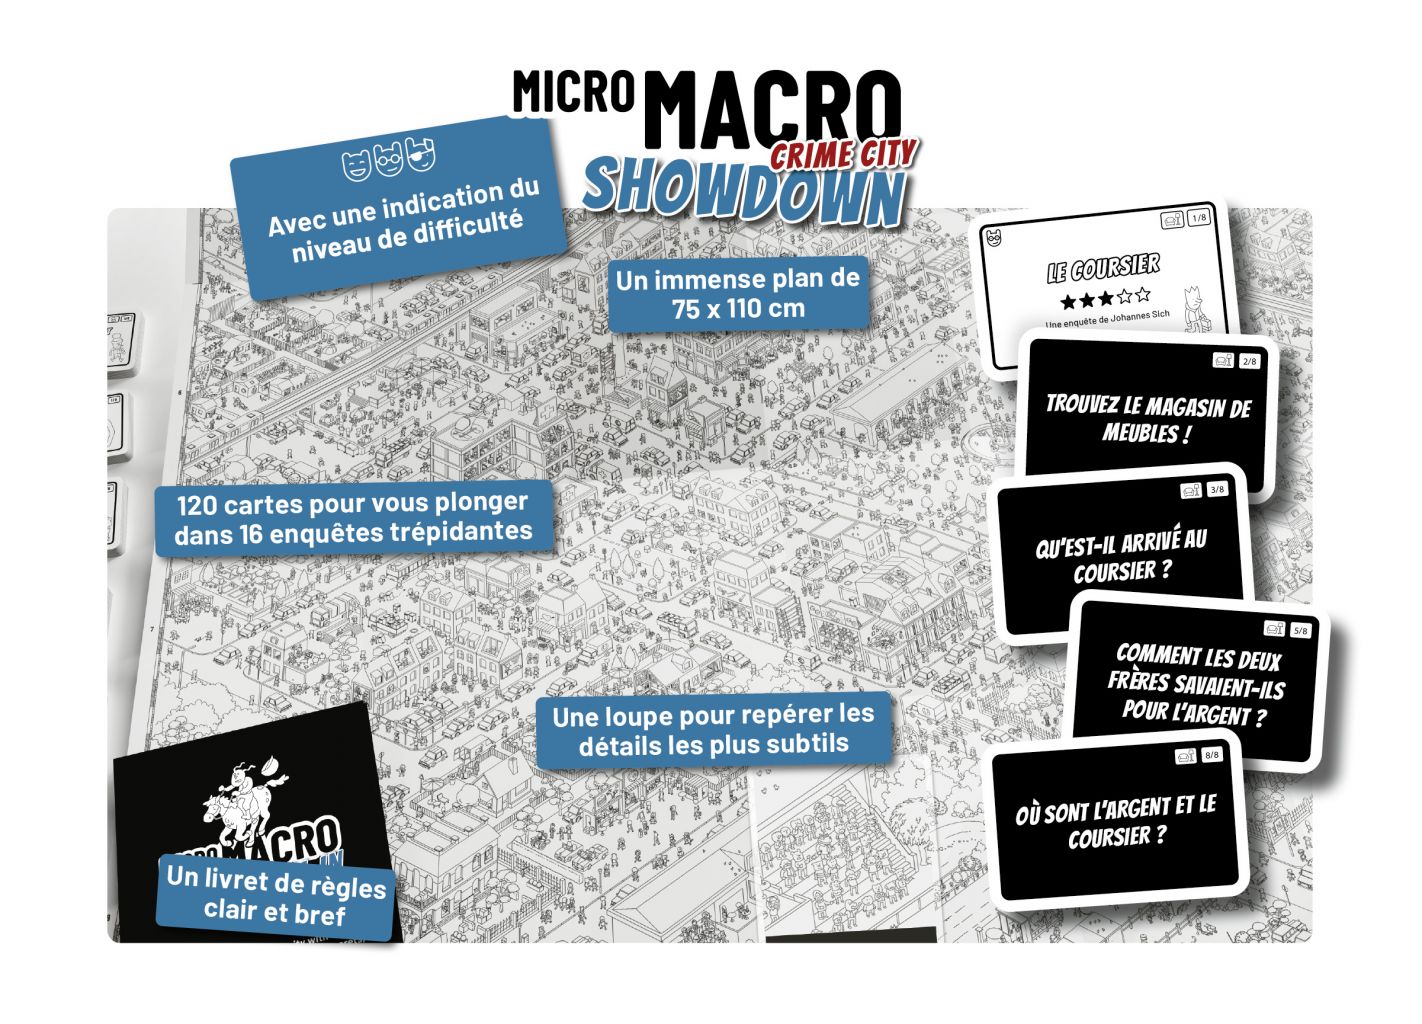 Micro Macro Crime City 3 - Tricks Tow